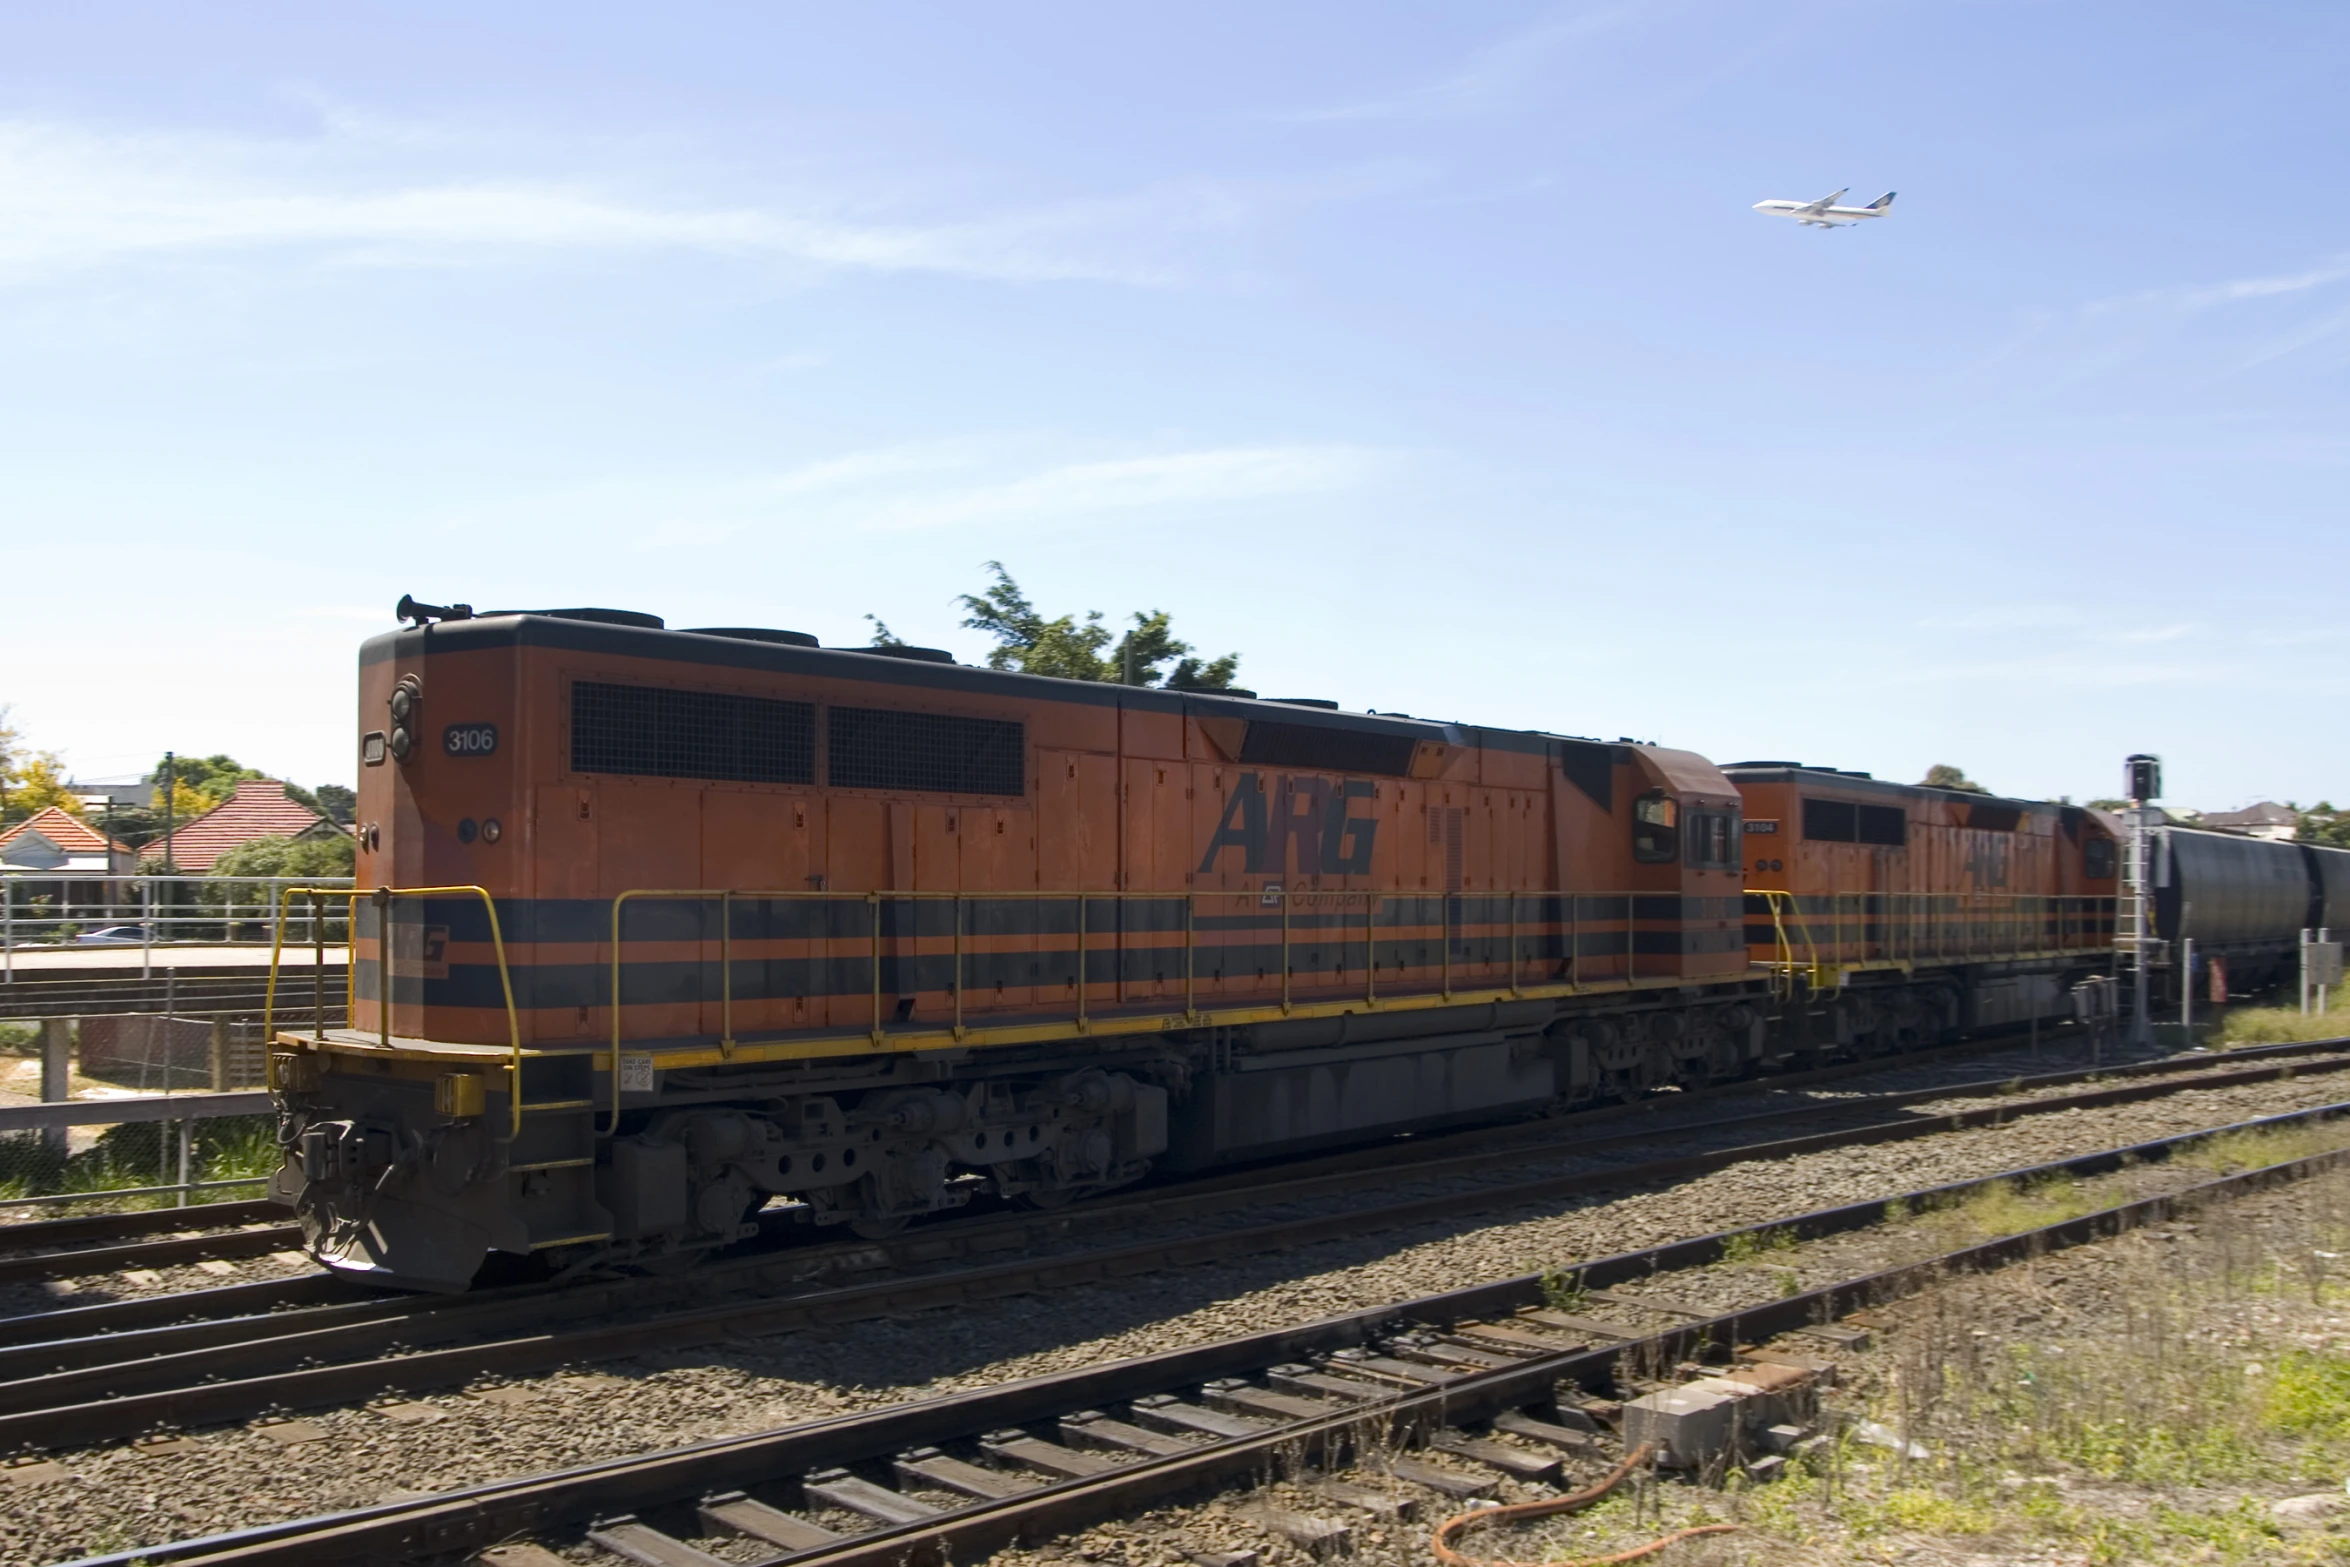 a large orange train sitting on the tracks